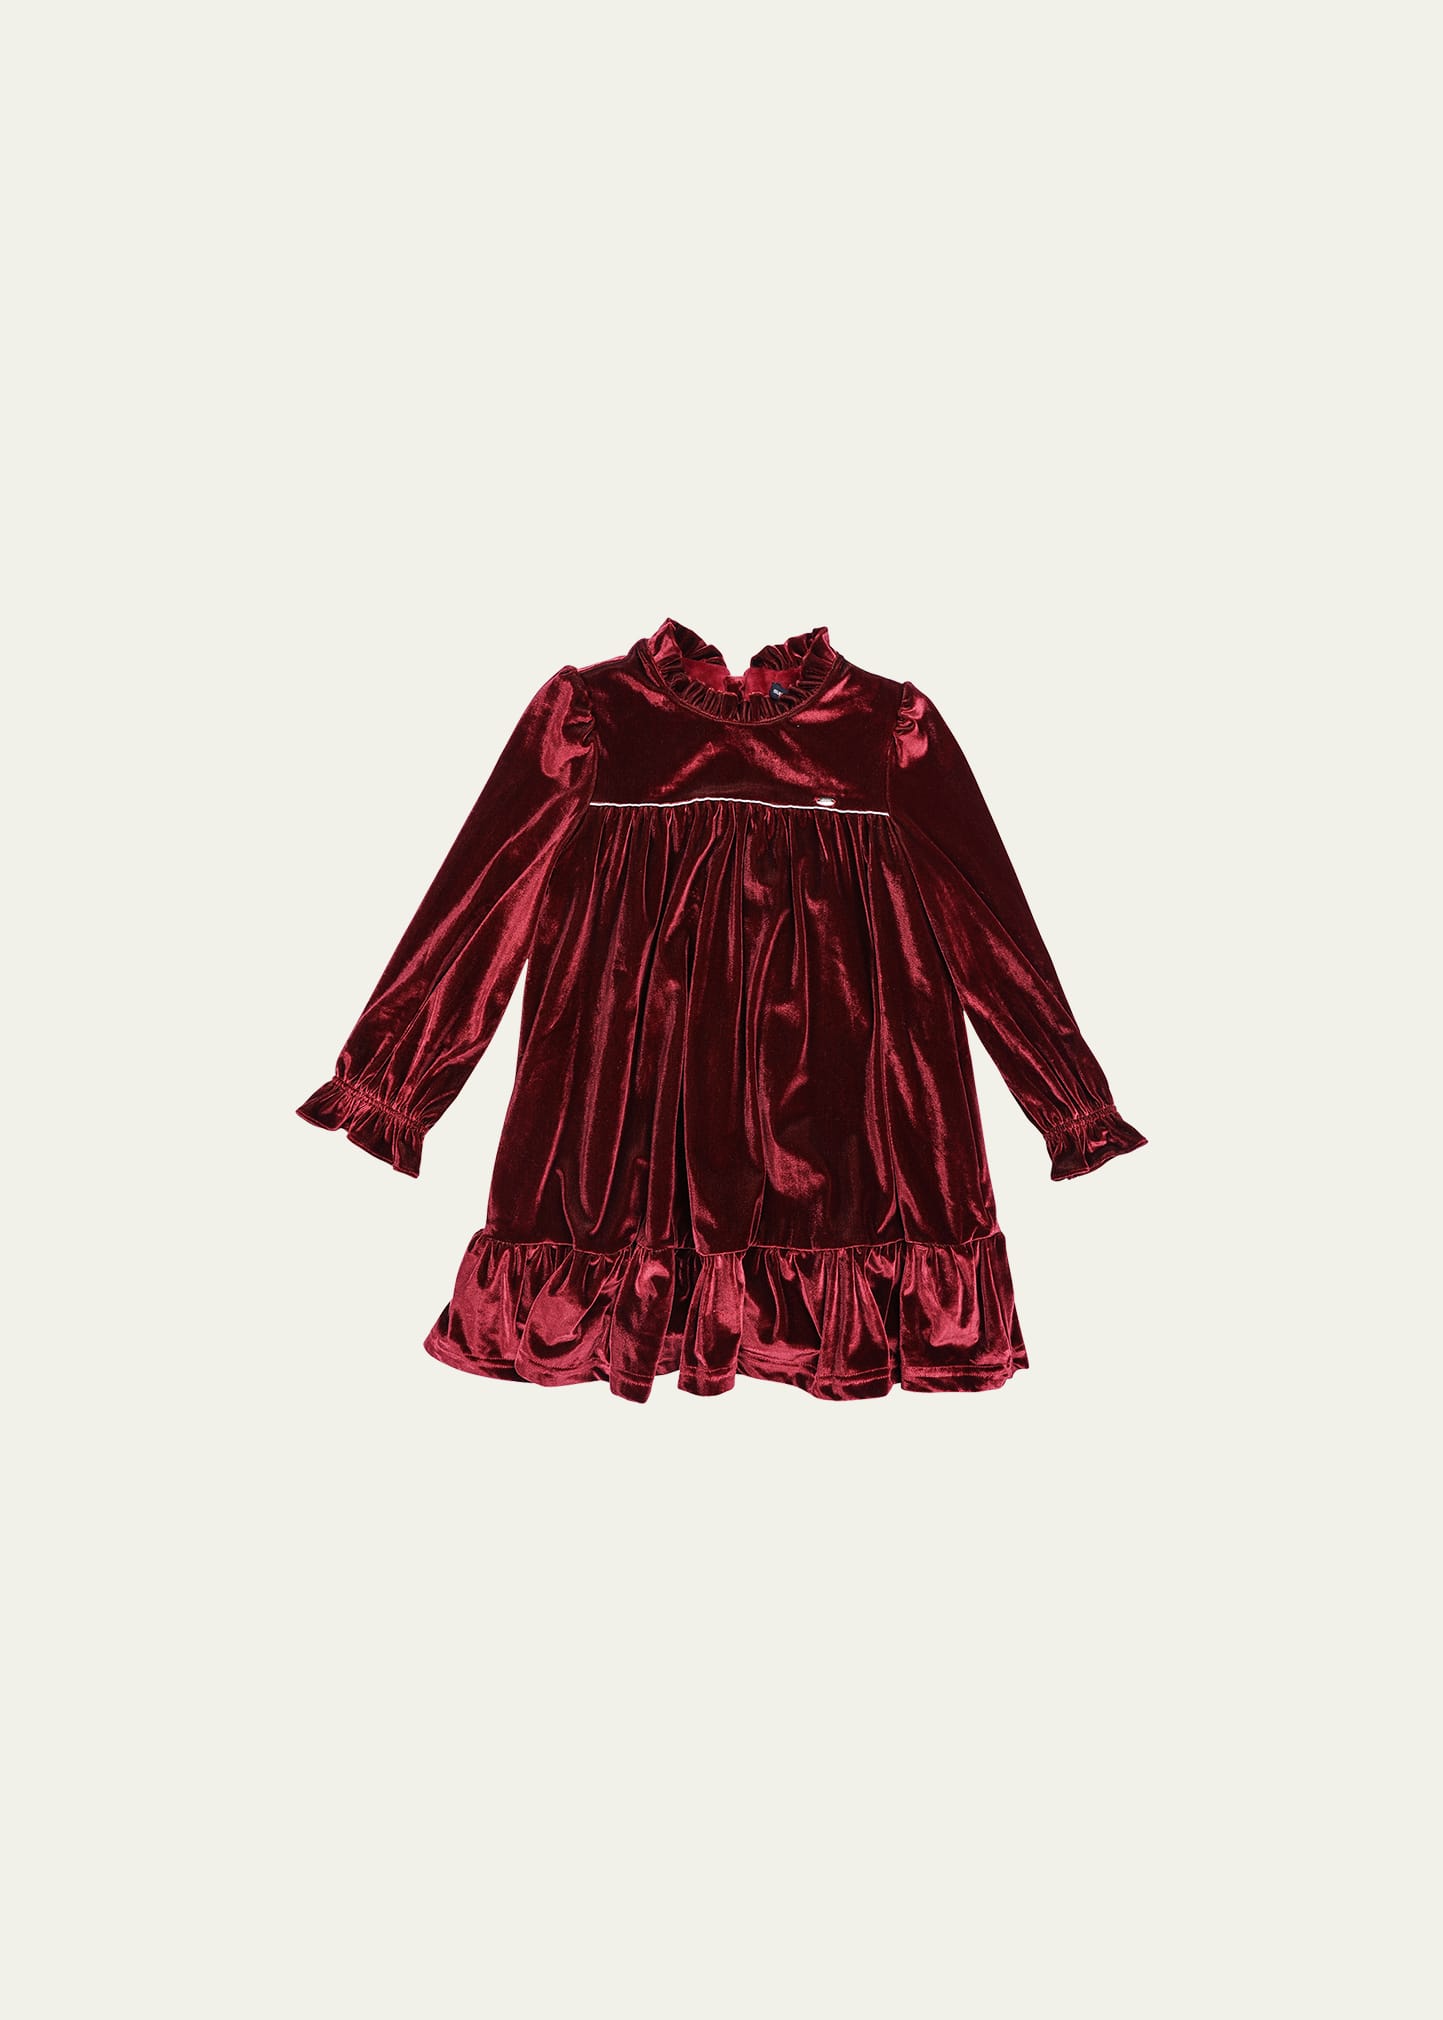 Island Kids & Kids Isle Girl's Velvet Ruffle-Trim Dress, Size 4-12